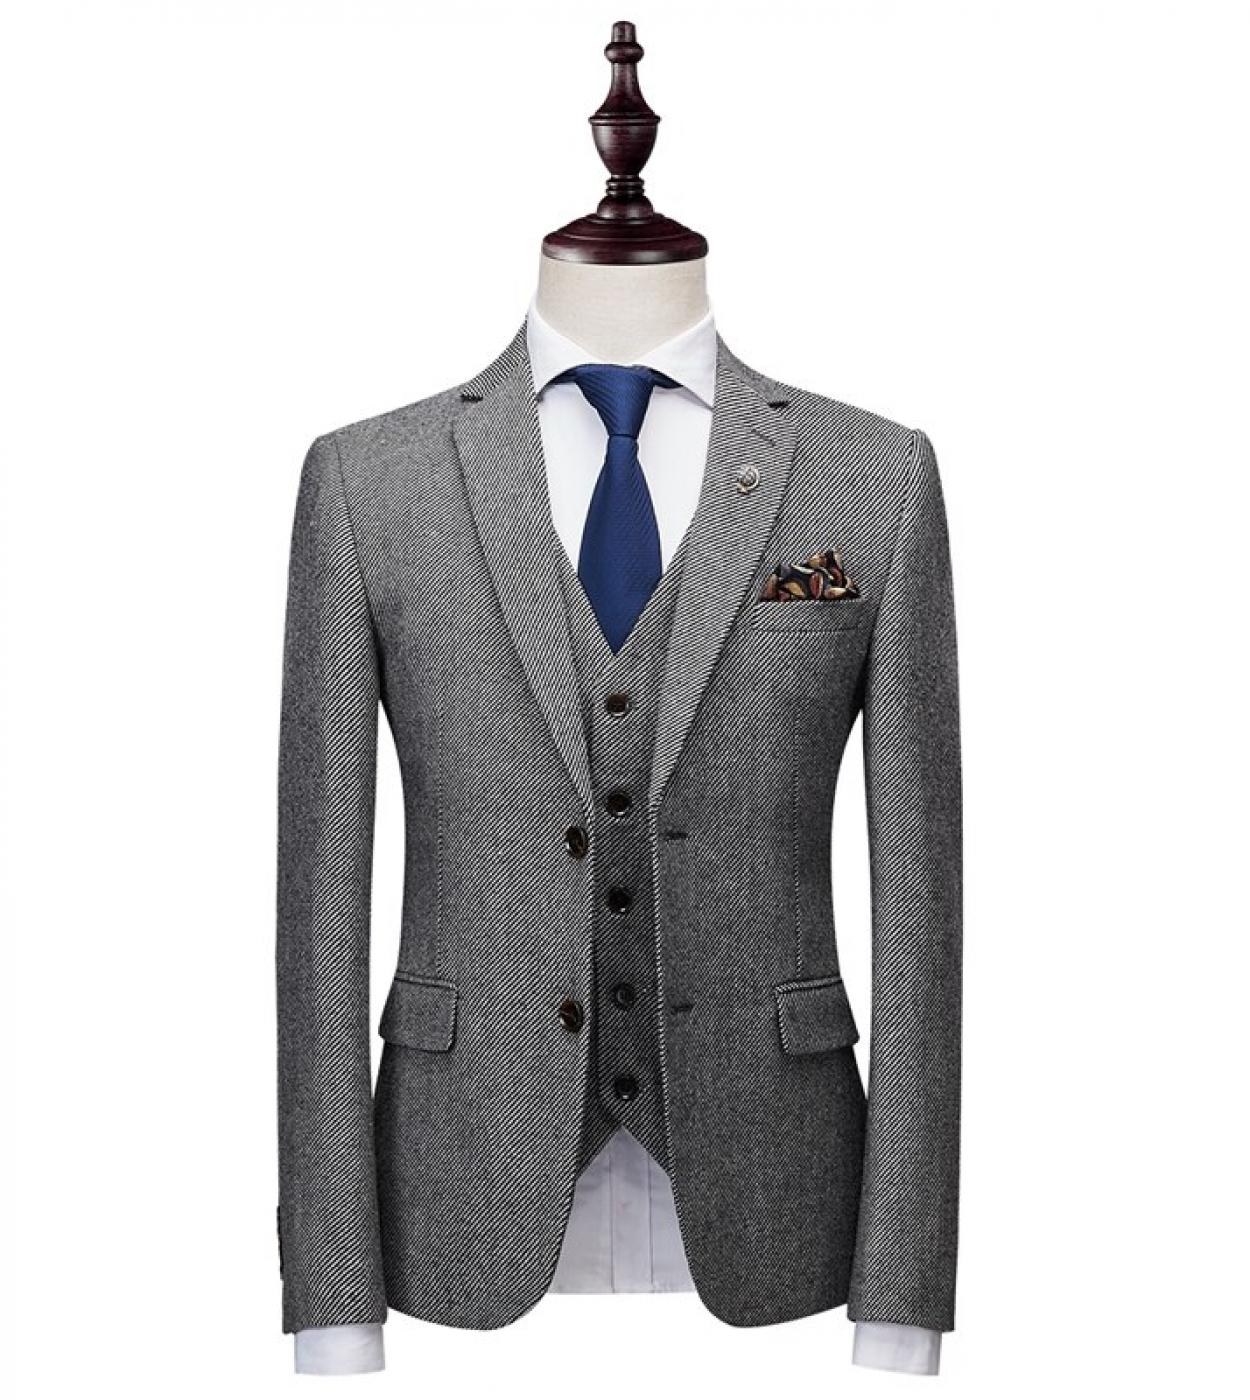 Jackets vest  Pants Autumn Winter Warm Wool Twill Fabric High End Brand Mens Formal Business Suit 3pce Set Groom Weddi